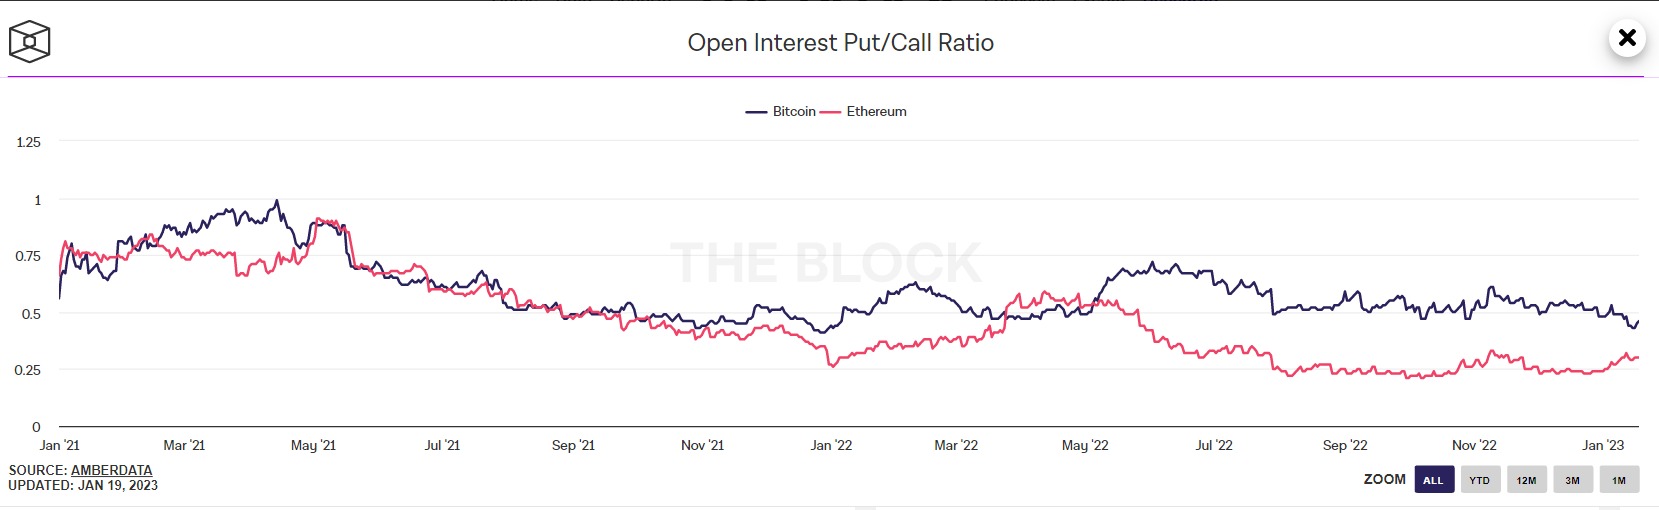 Ethereum price retreats as the put/call ratio edges upwards